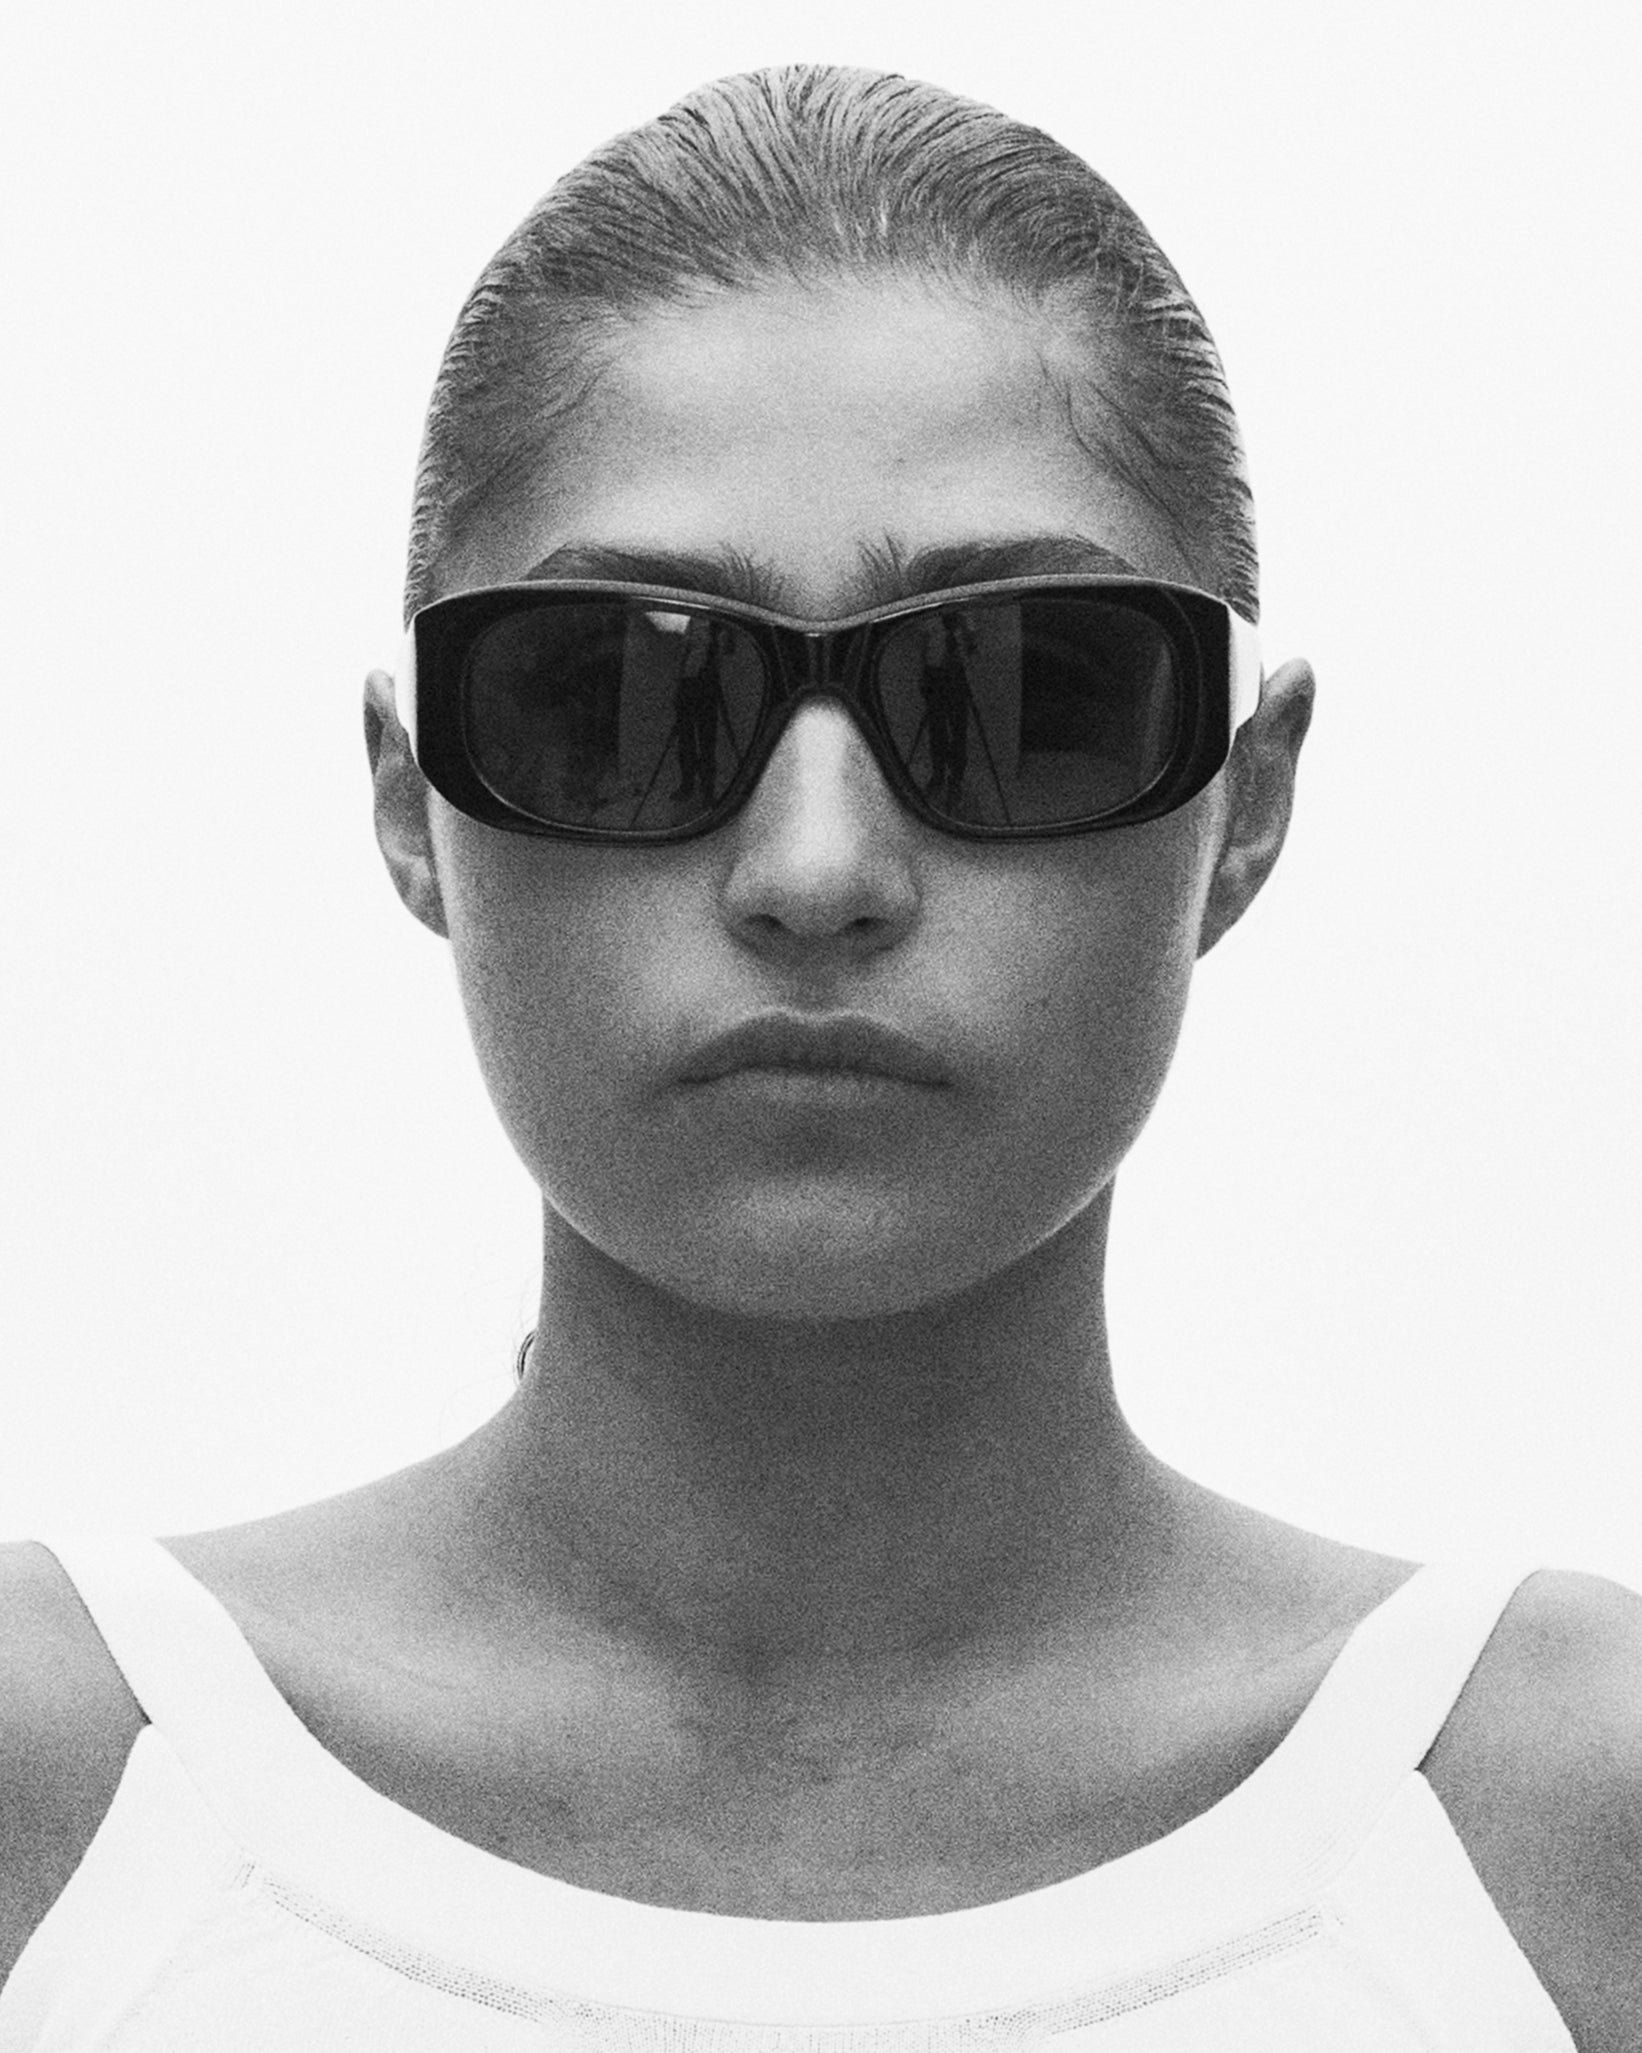 model wearing sunglasses, portrait view